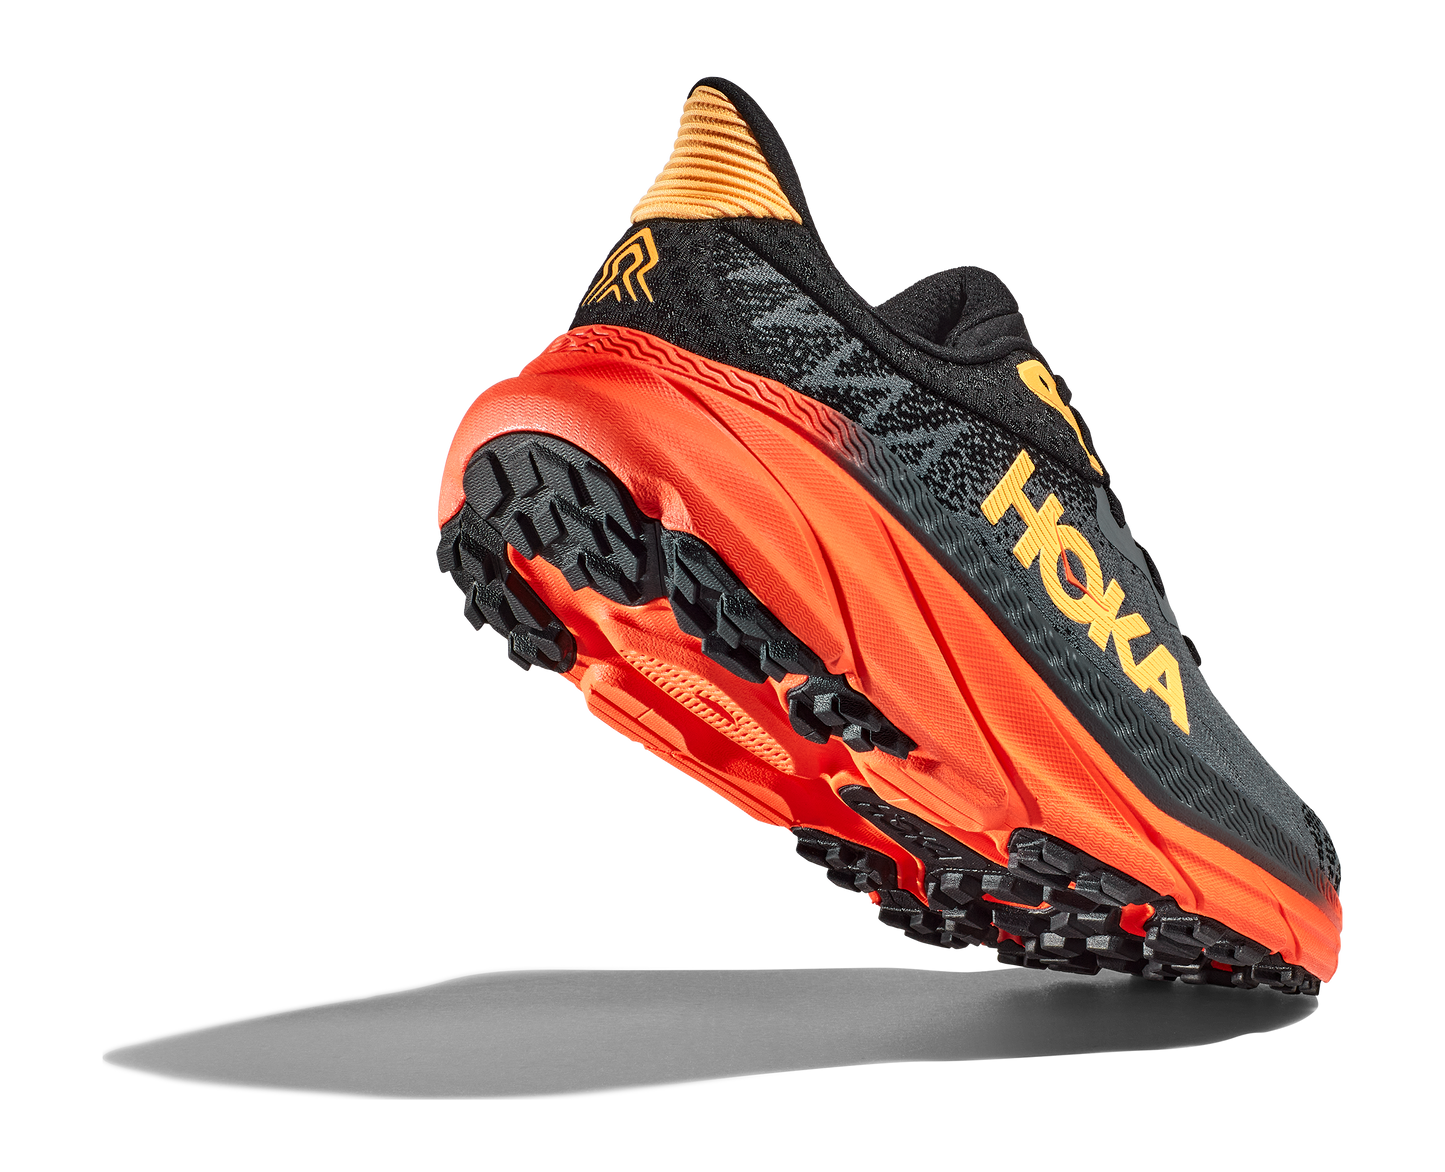 Hoka Men's Challenger 7 black, orange, gray, yellow multi terrain running shoe